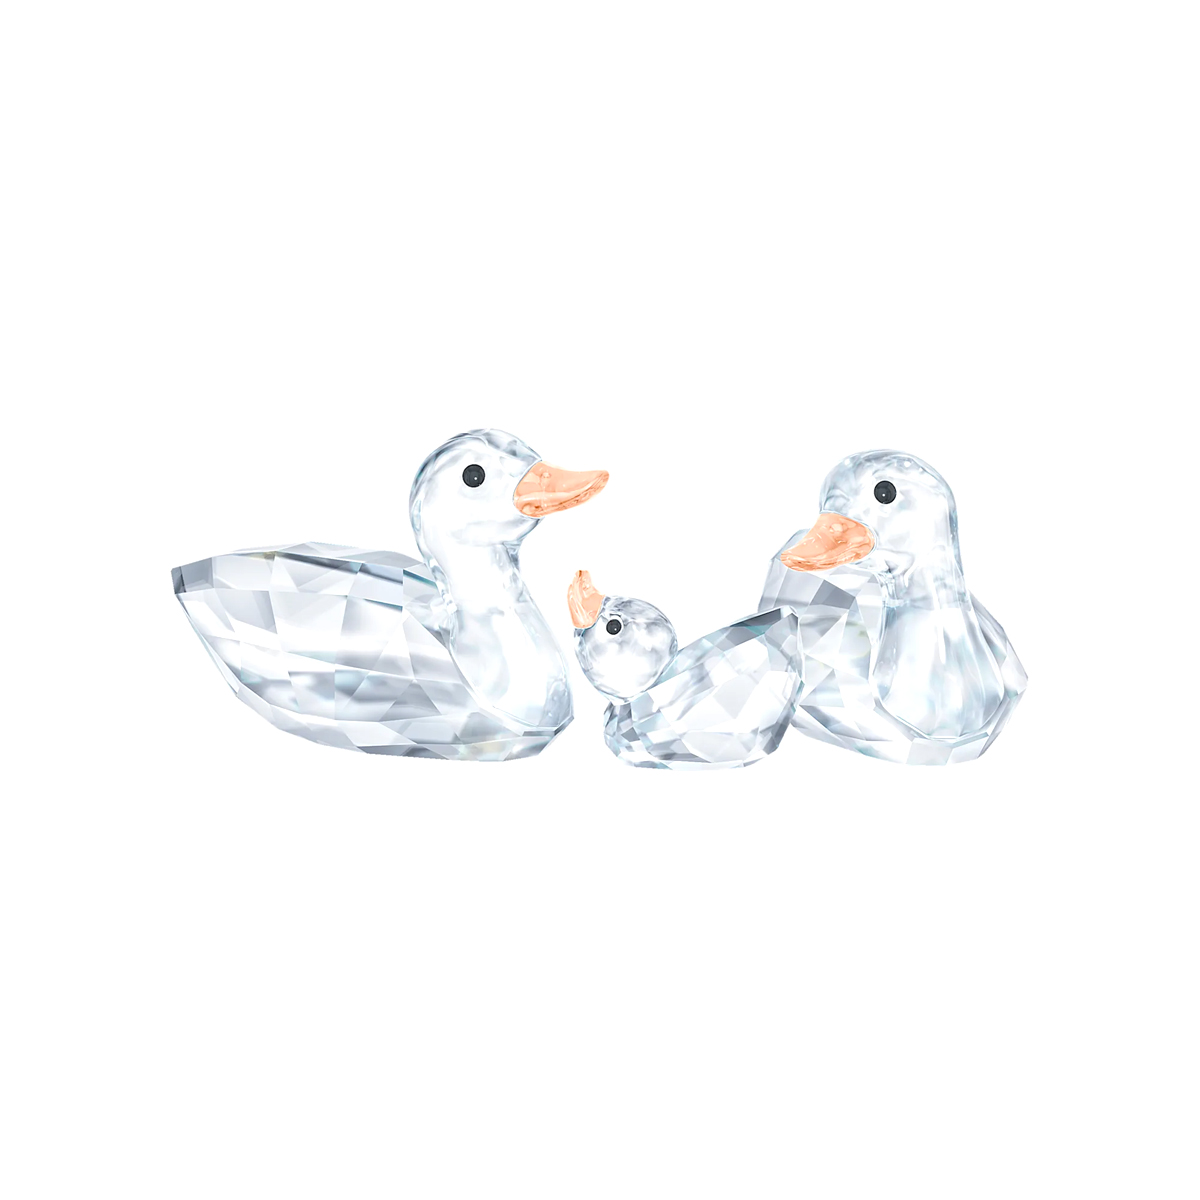 Swarovski - The Peaceful Countryside: Ducks Set of 3